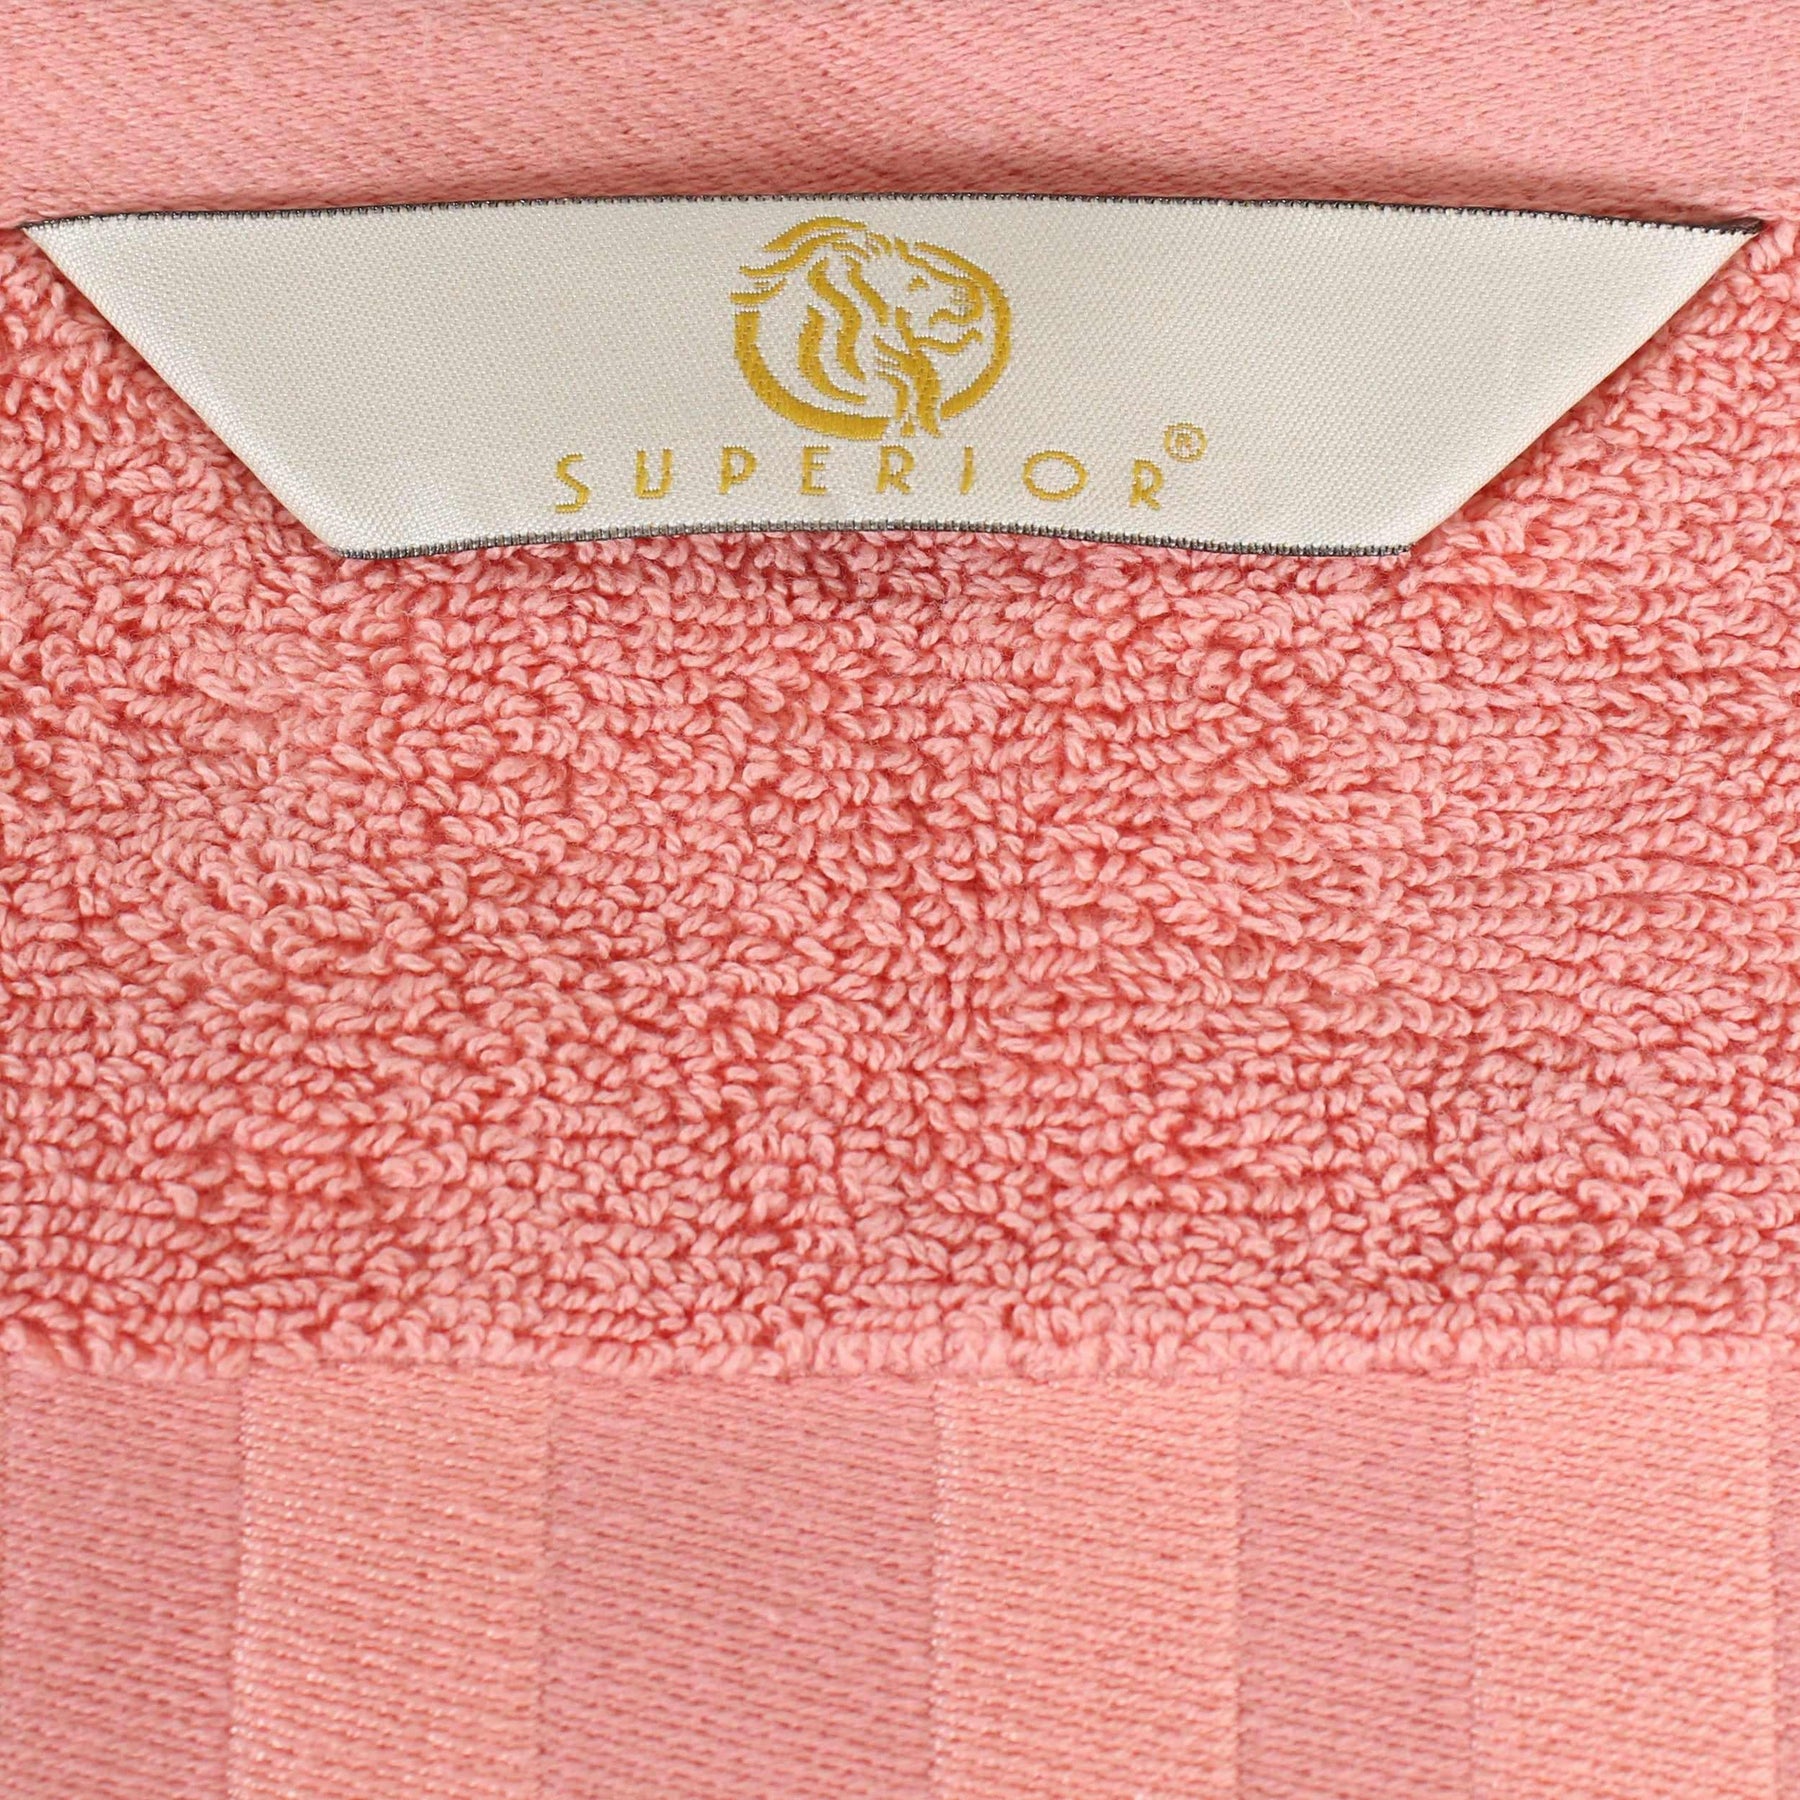  Superior Larissa Cotton 4-Piece Bath Towel Set with Geometric Embroidered Jacquard Border - Coral